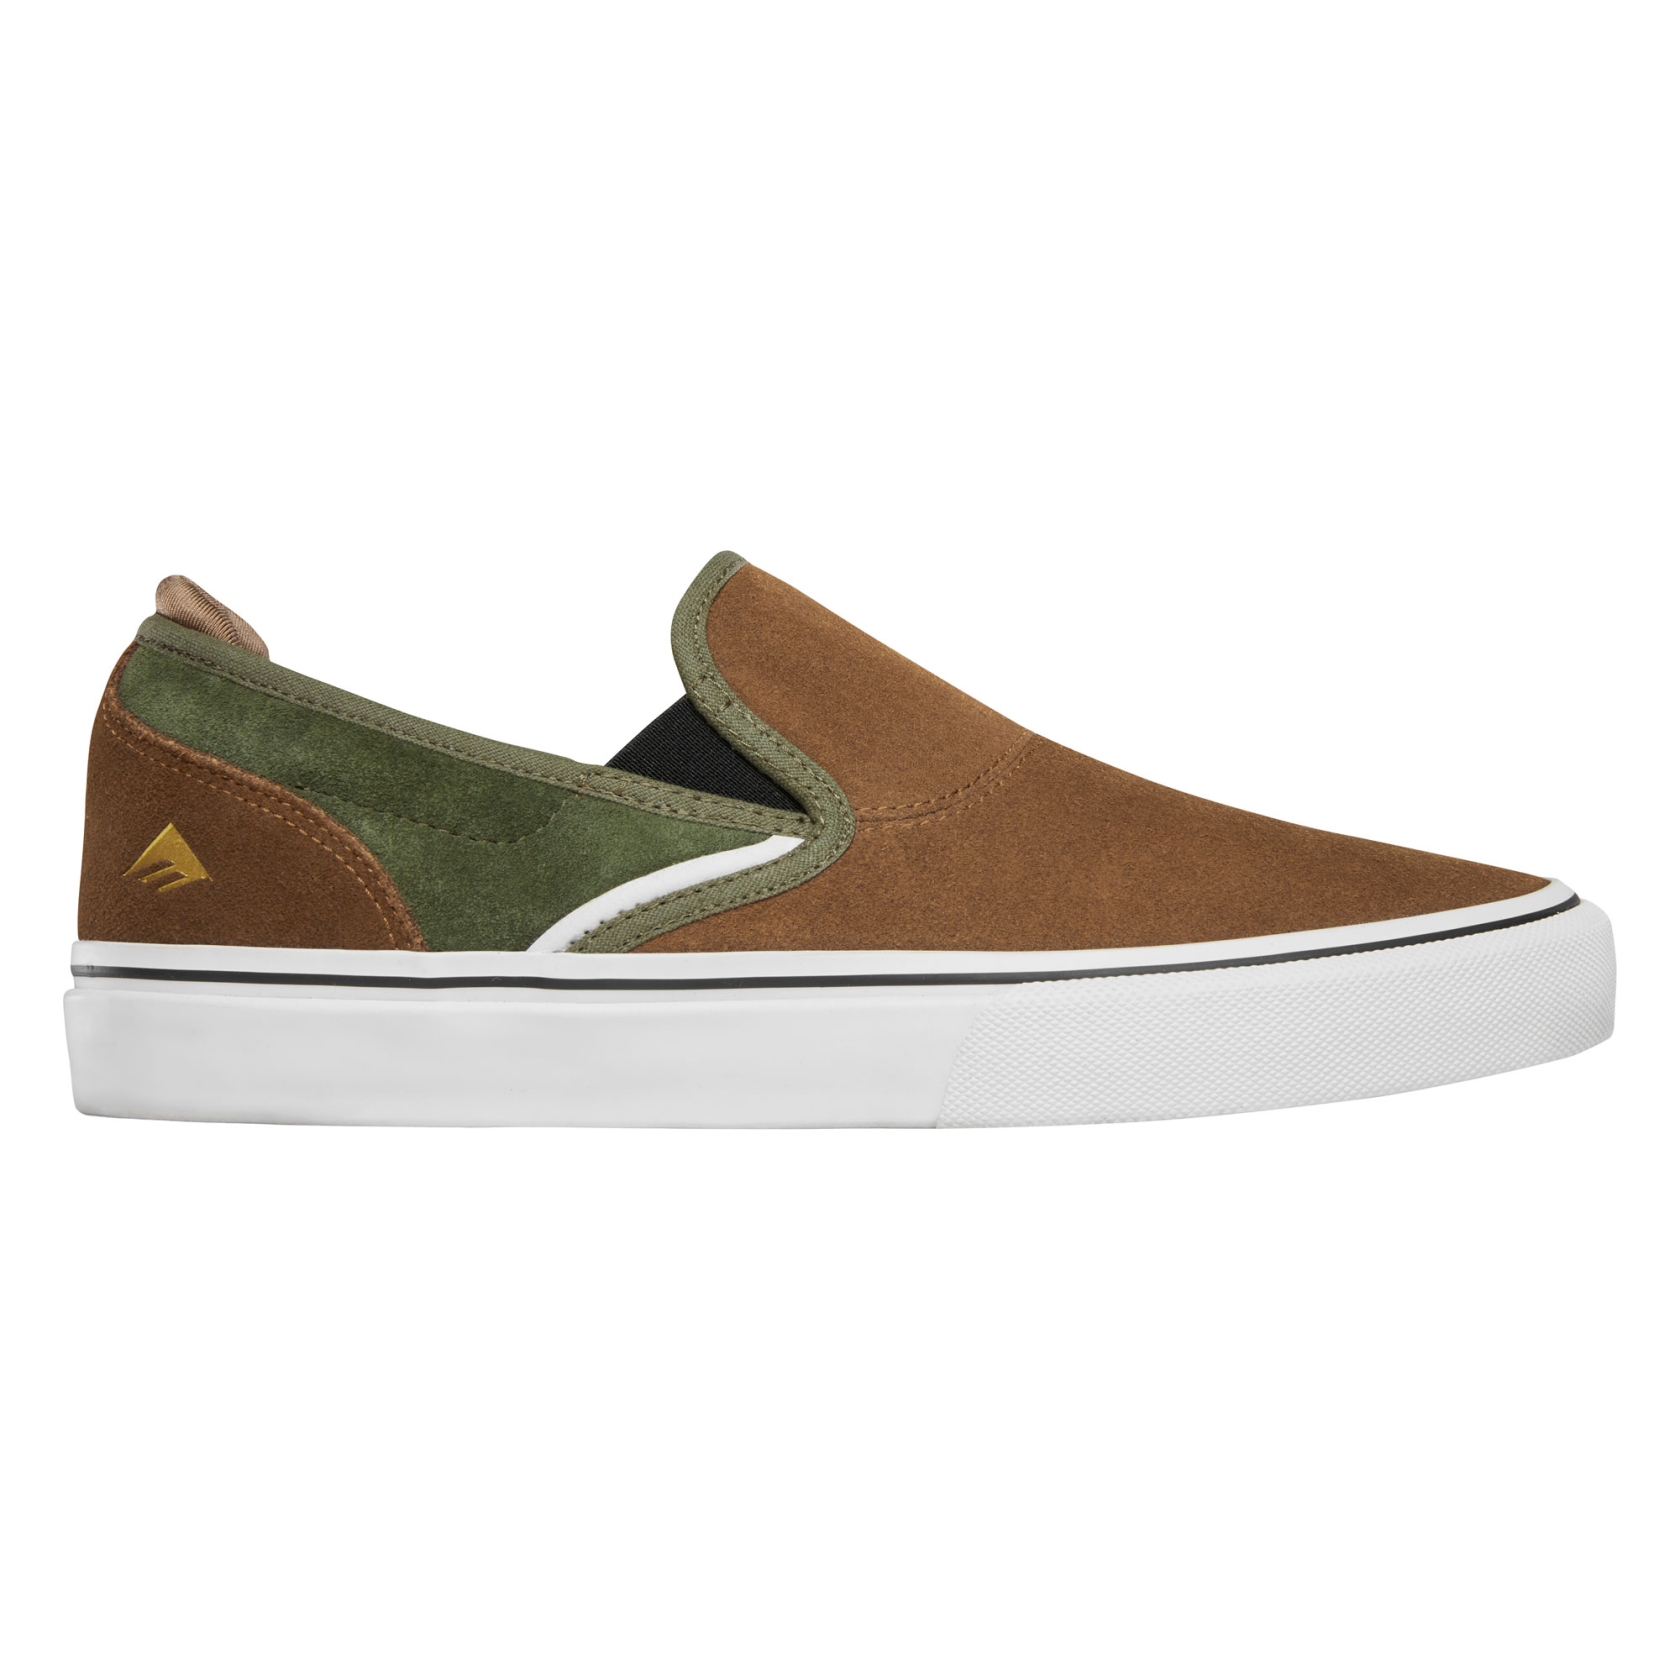 EMERICA Shoe WINO G6 SLIP-ON bro/gre brown/green